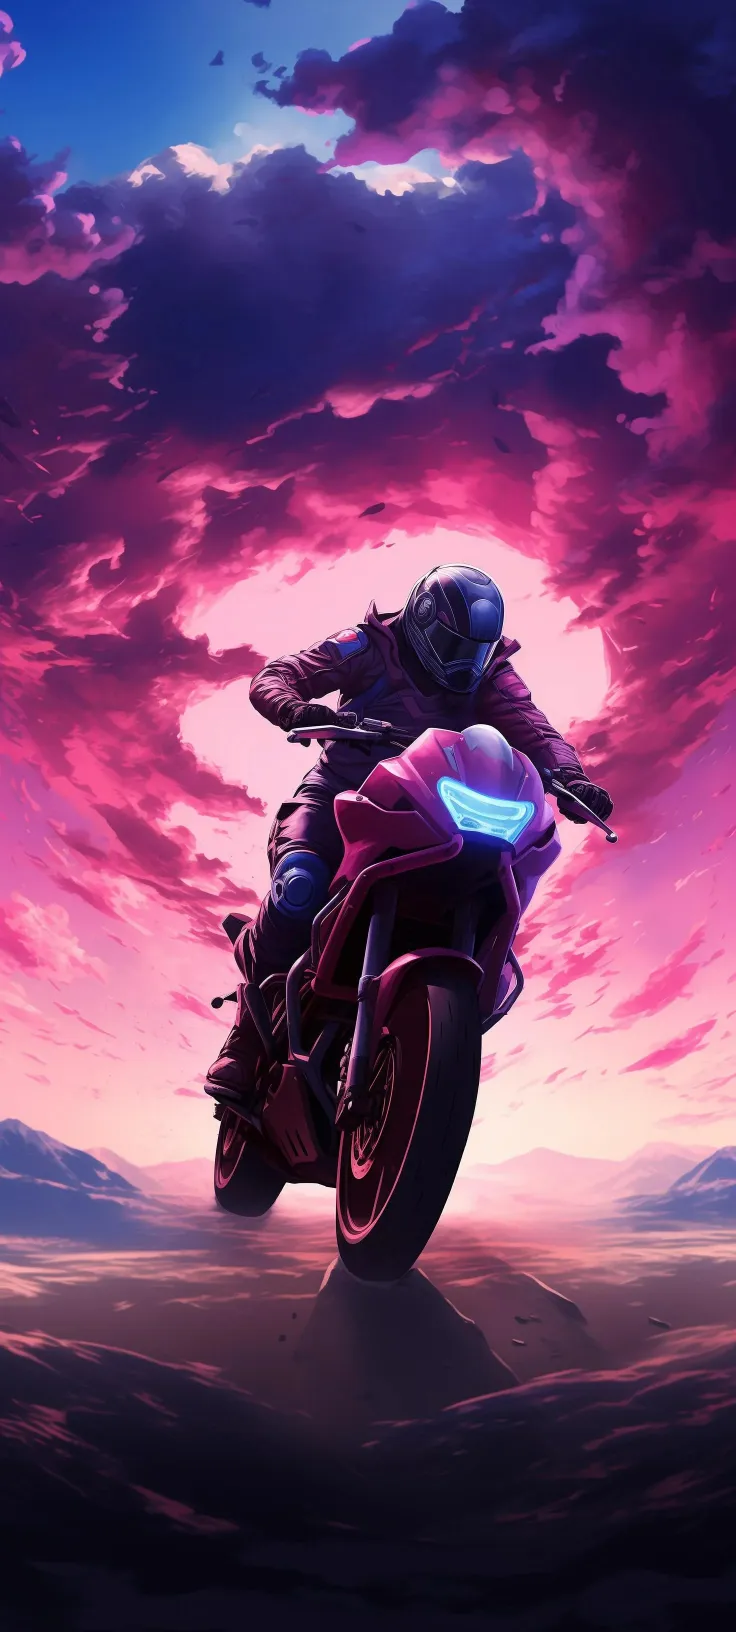 biker home screen wallpaper